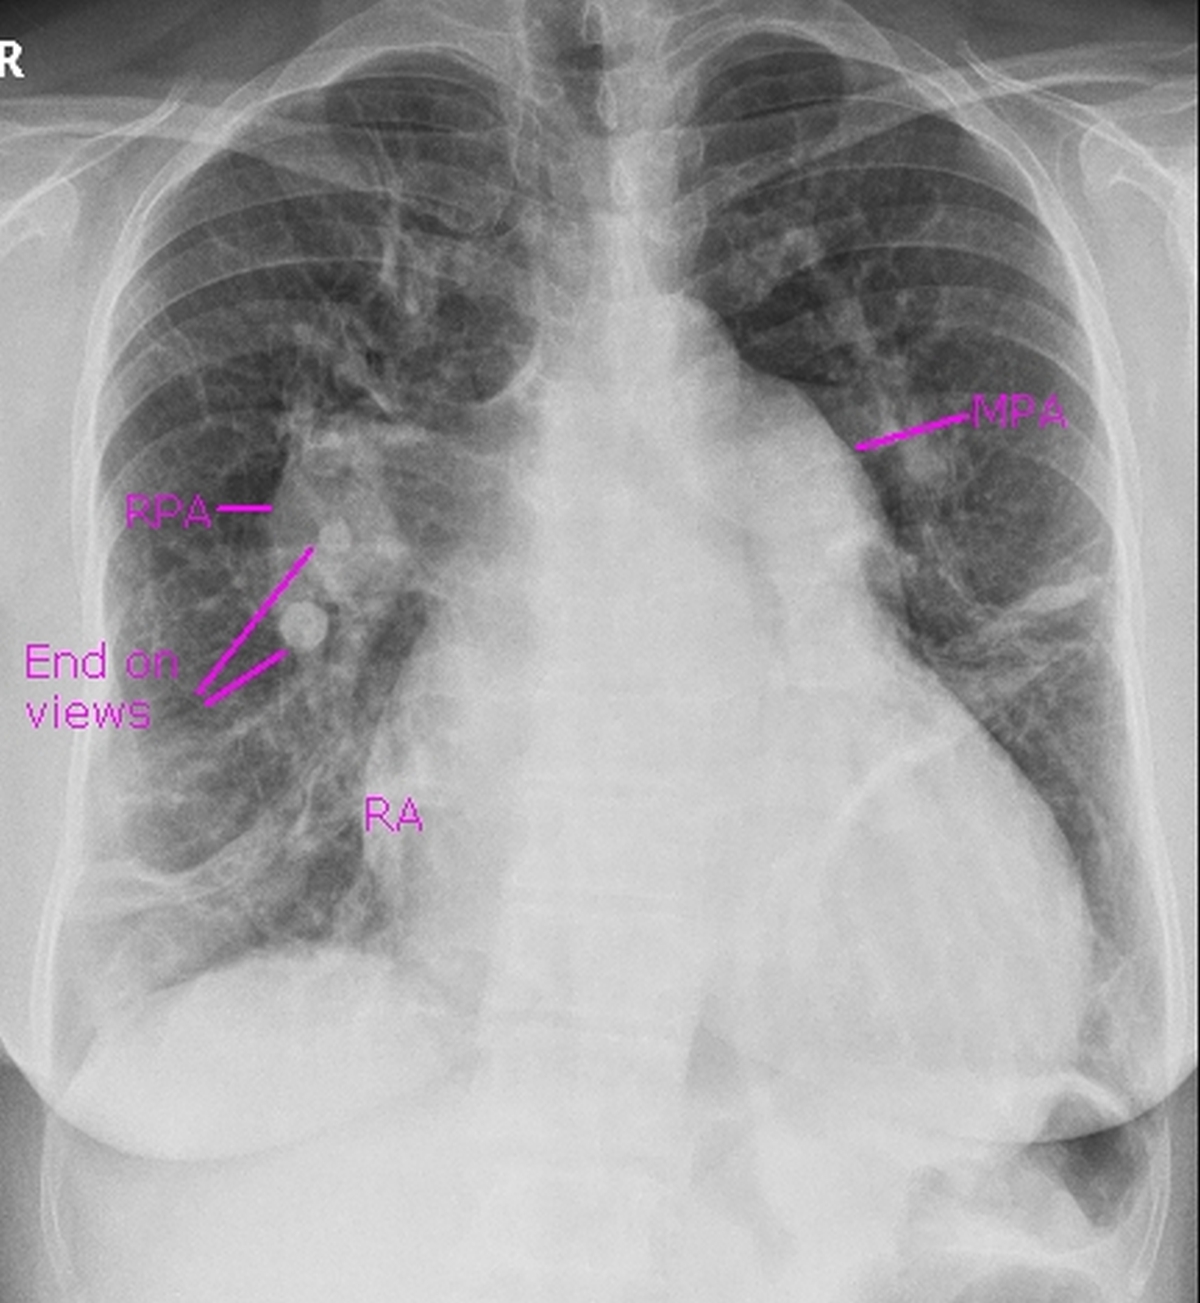 Severe pulmonary hypertension on CXR